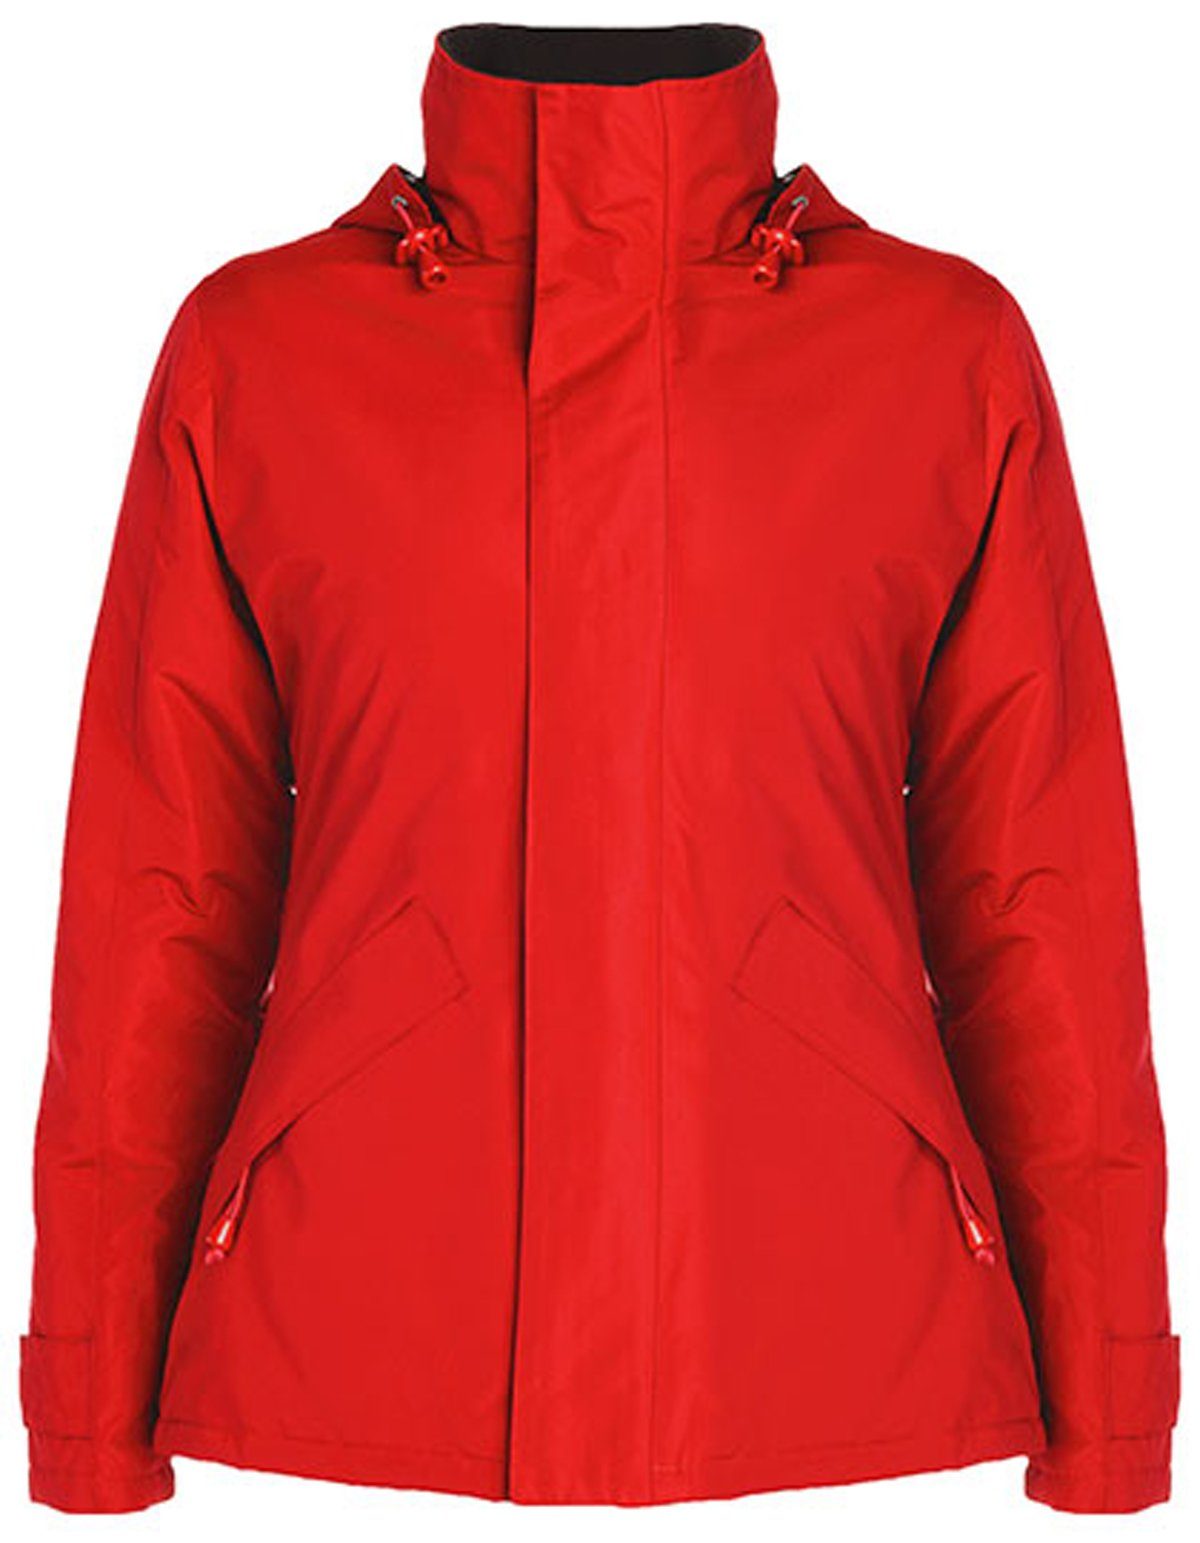 -RY5078- Roly Red Europa Jacke 60 Outdoorjacke Woman